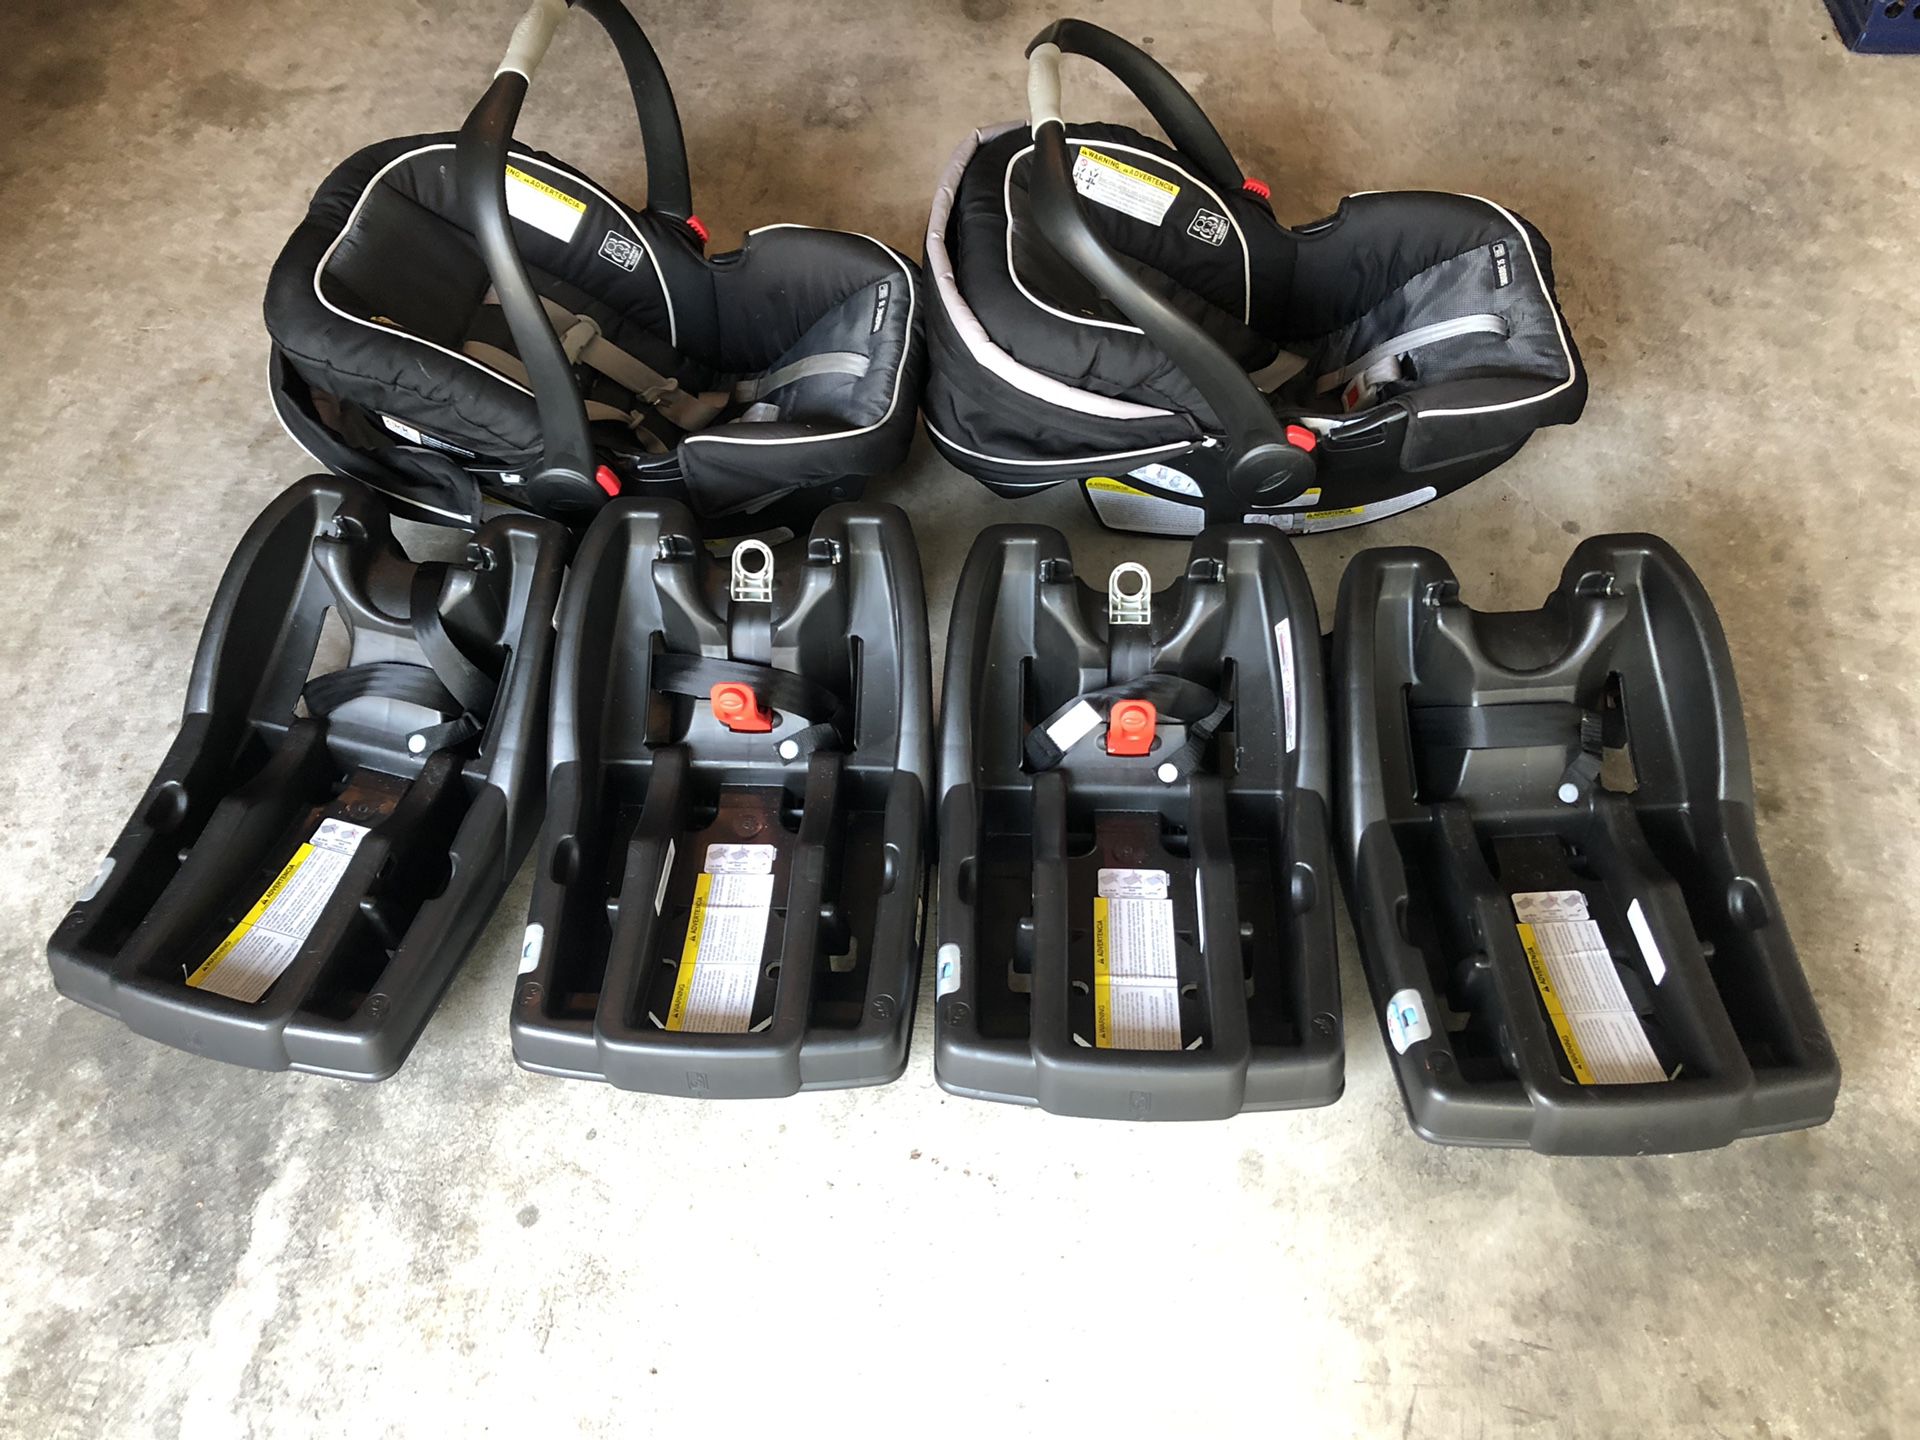 Graco Snugride 35 infant car seats